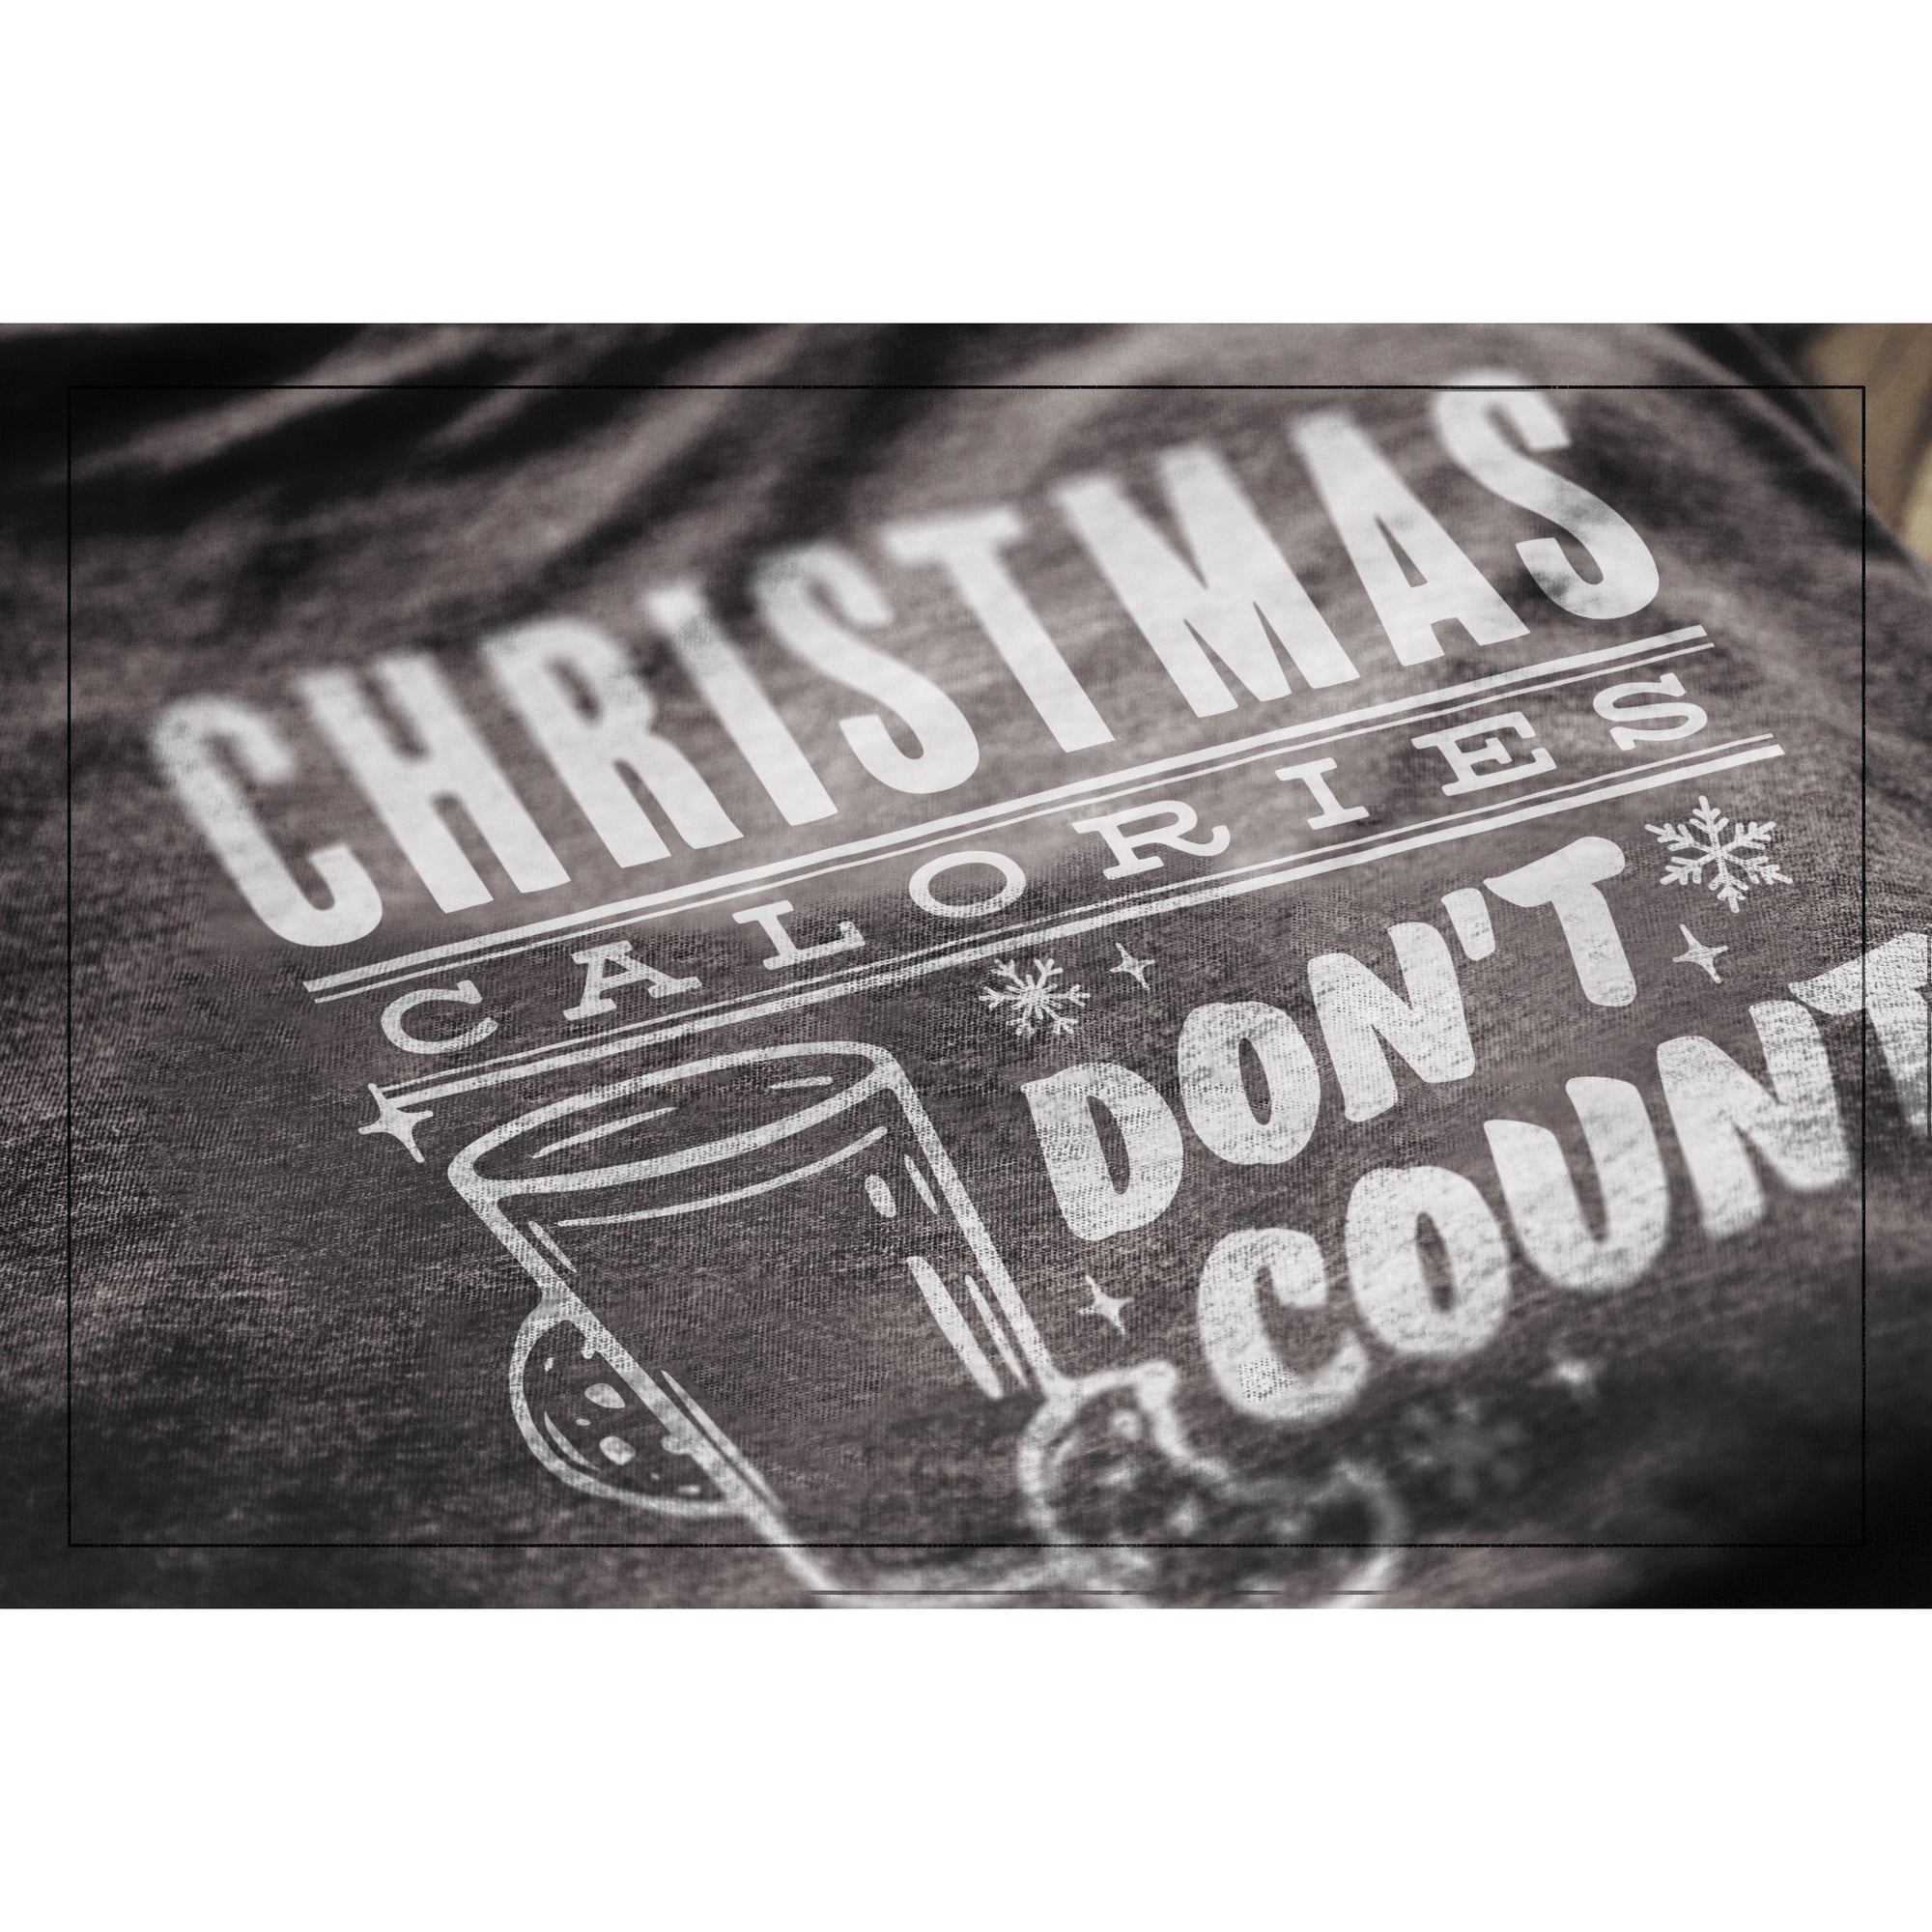 Christmas Calories Don't Count Charcoal Printed Graphic Men's Crew T-Shirt Tee Closeup Details